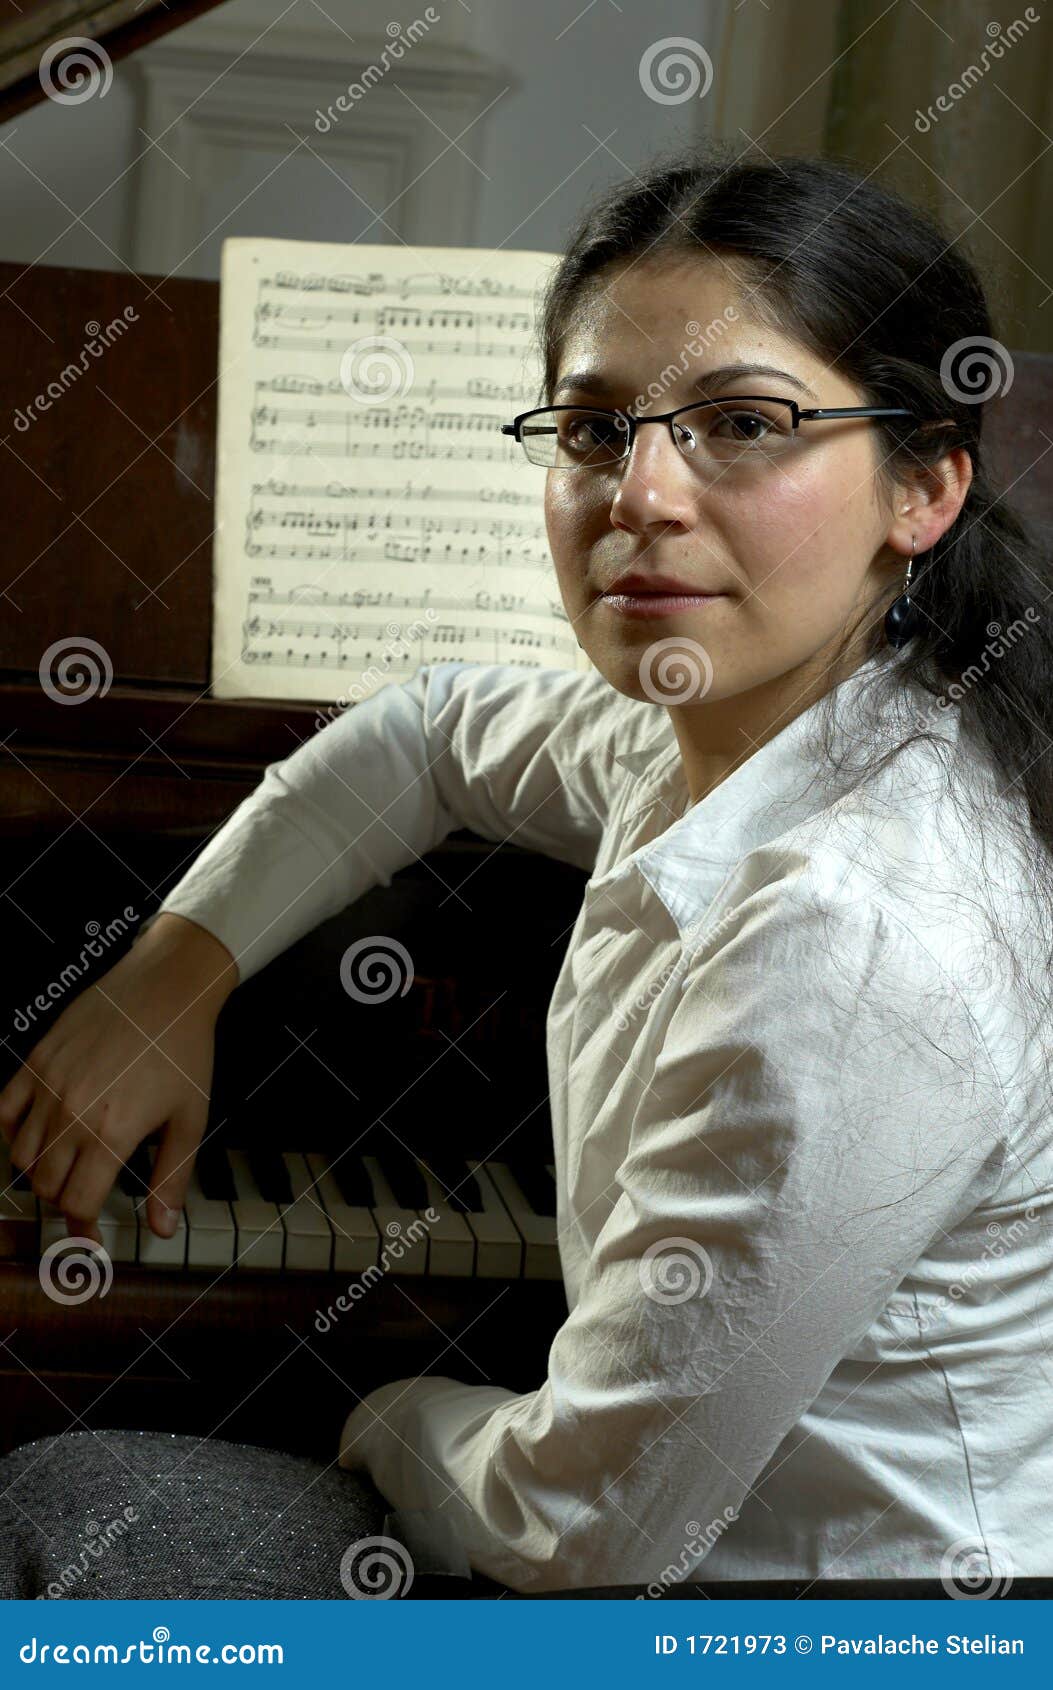 portrait of a pianist